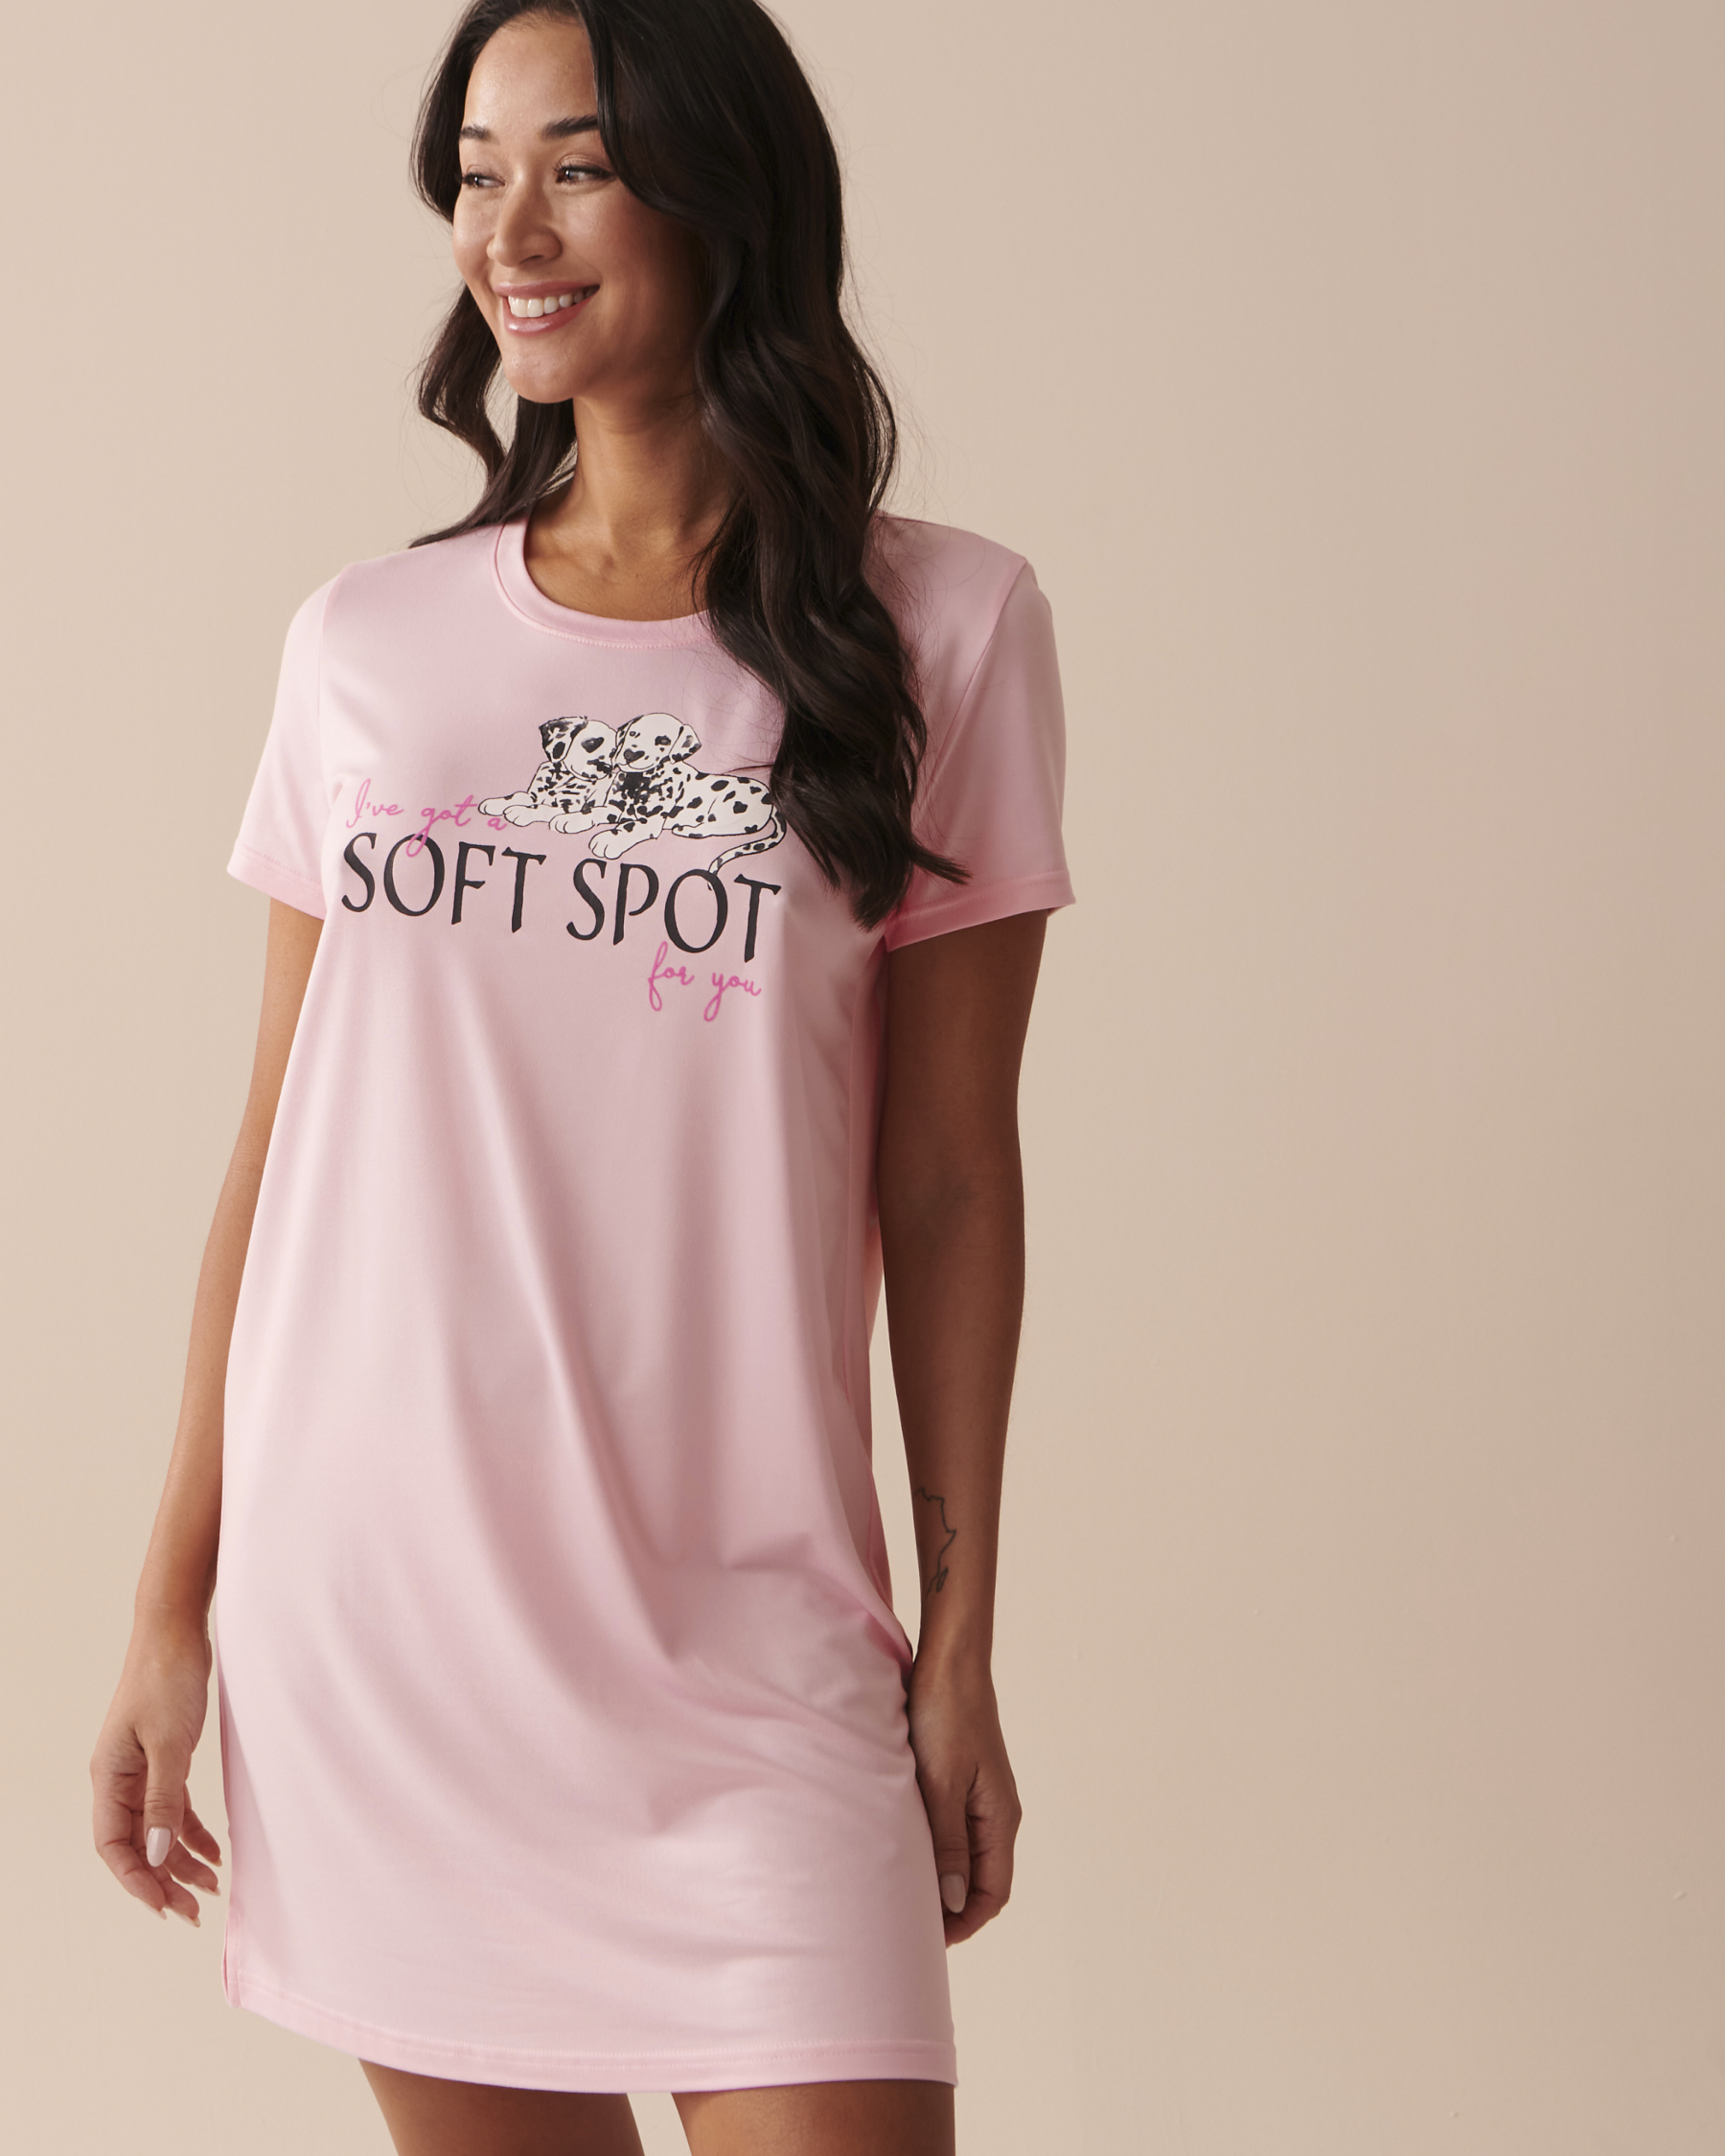 LA VIE EN ROSE Dalmatians Super Soft Sleepshirt Tender Pink 40500328 - View1